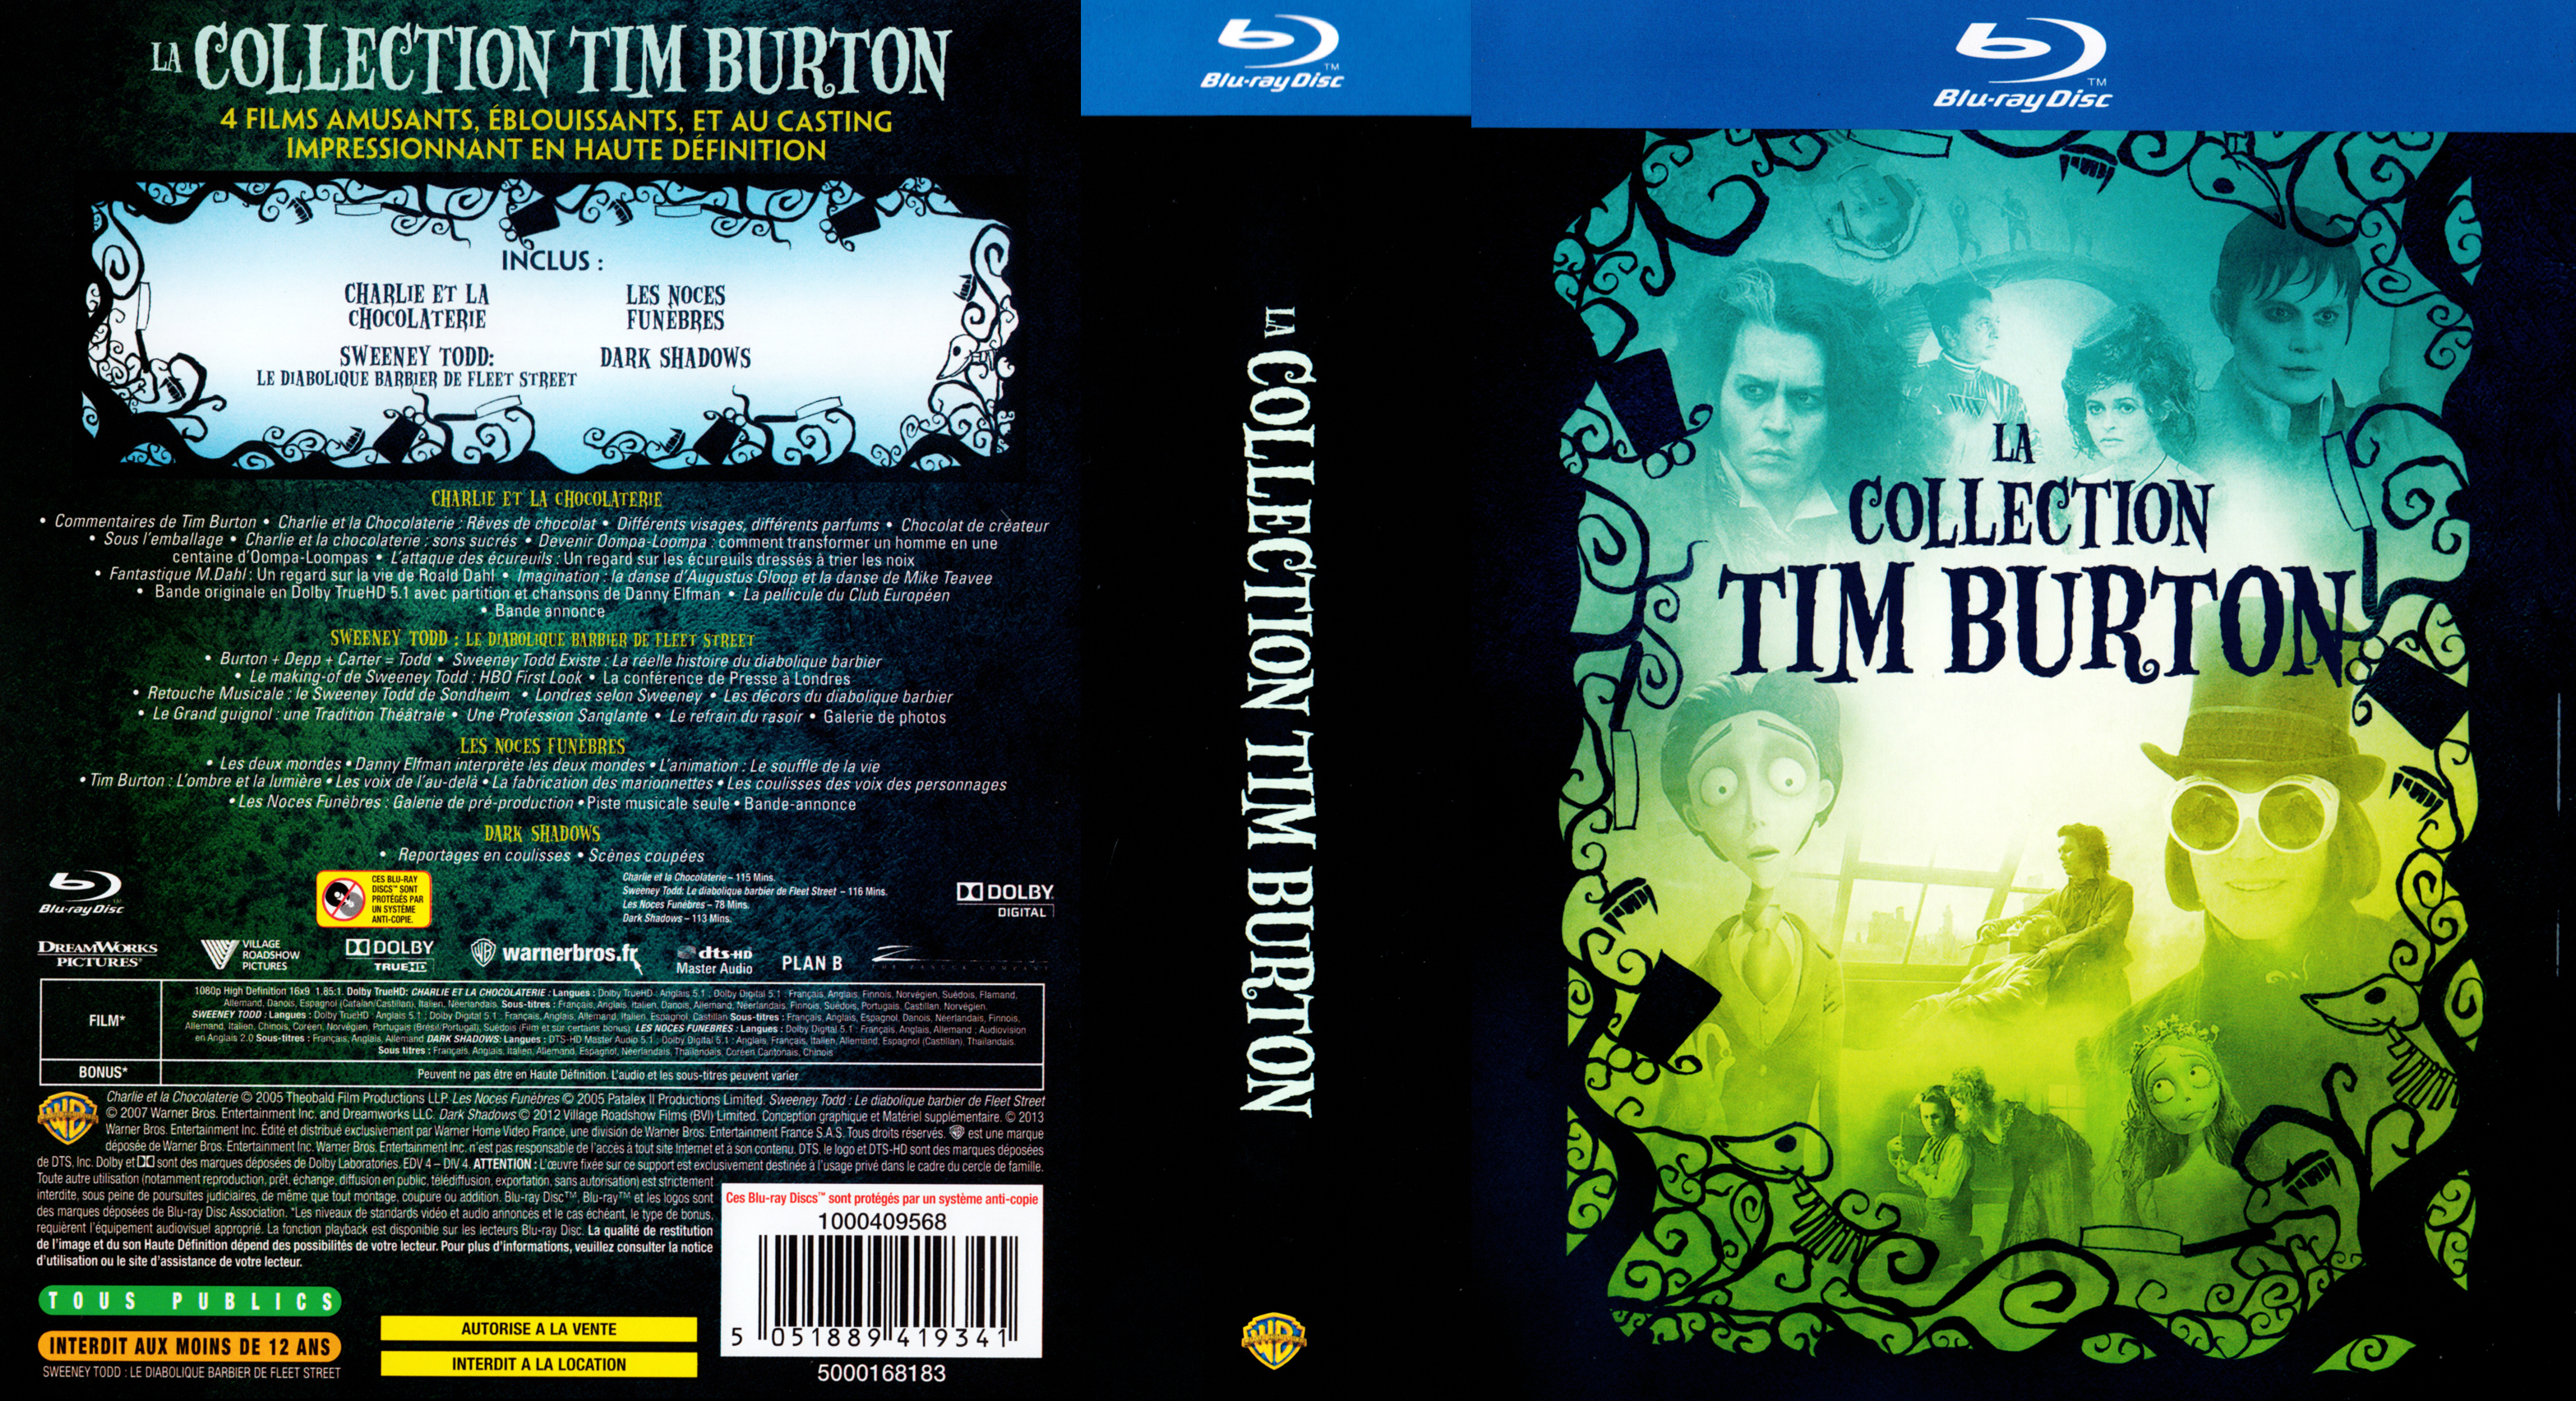 Jaquette DVD Tim Burton collection COFFRET (BLU-RAY) v3